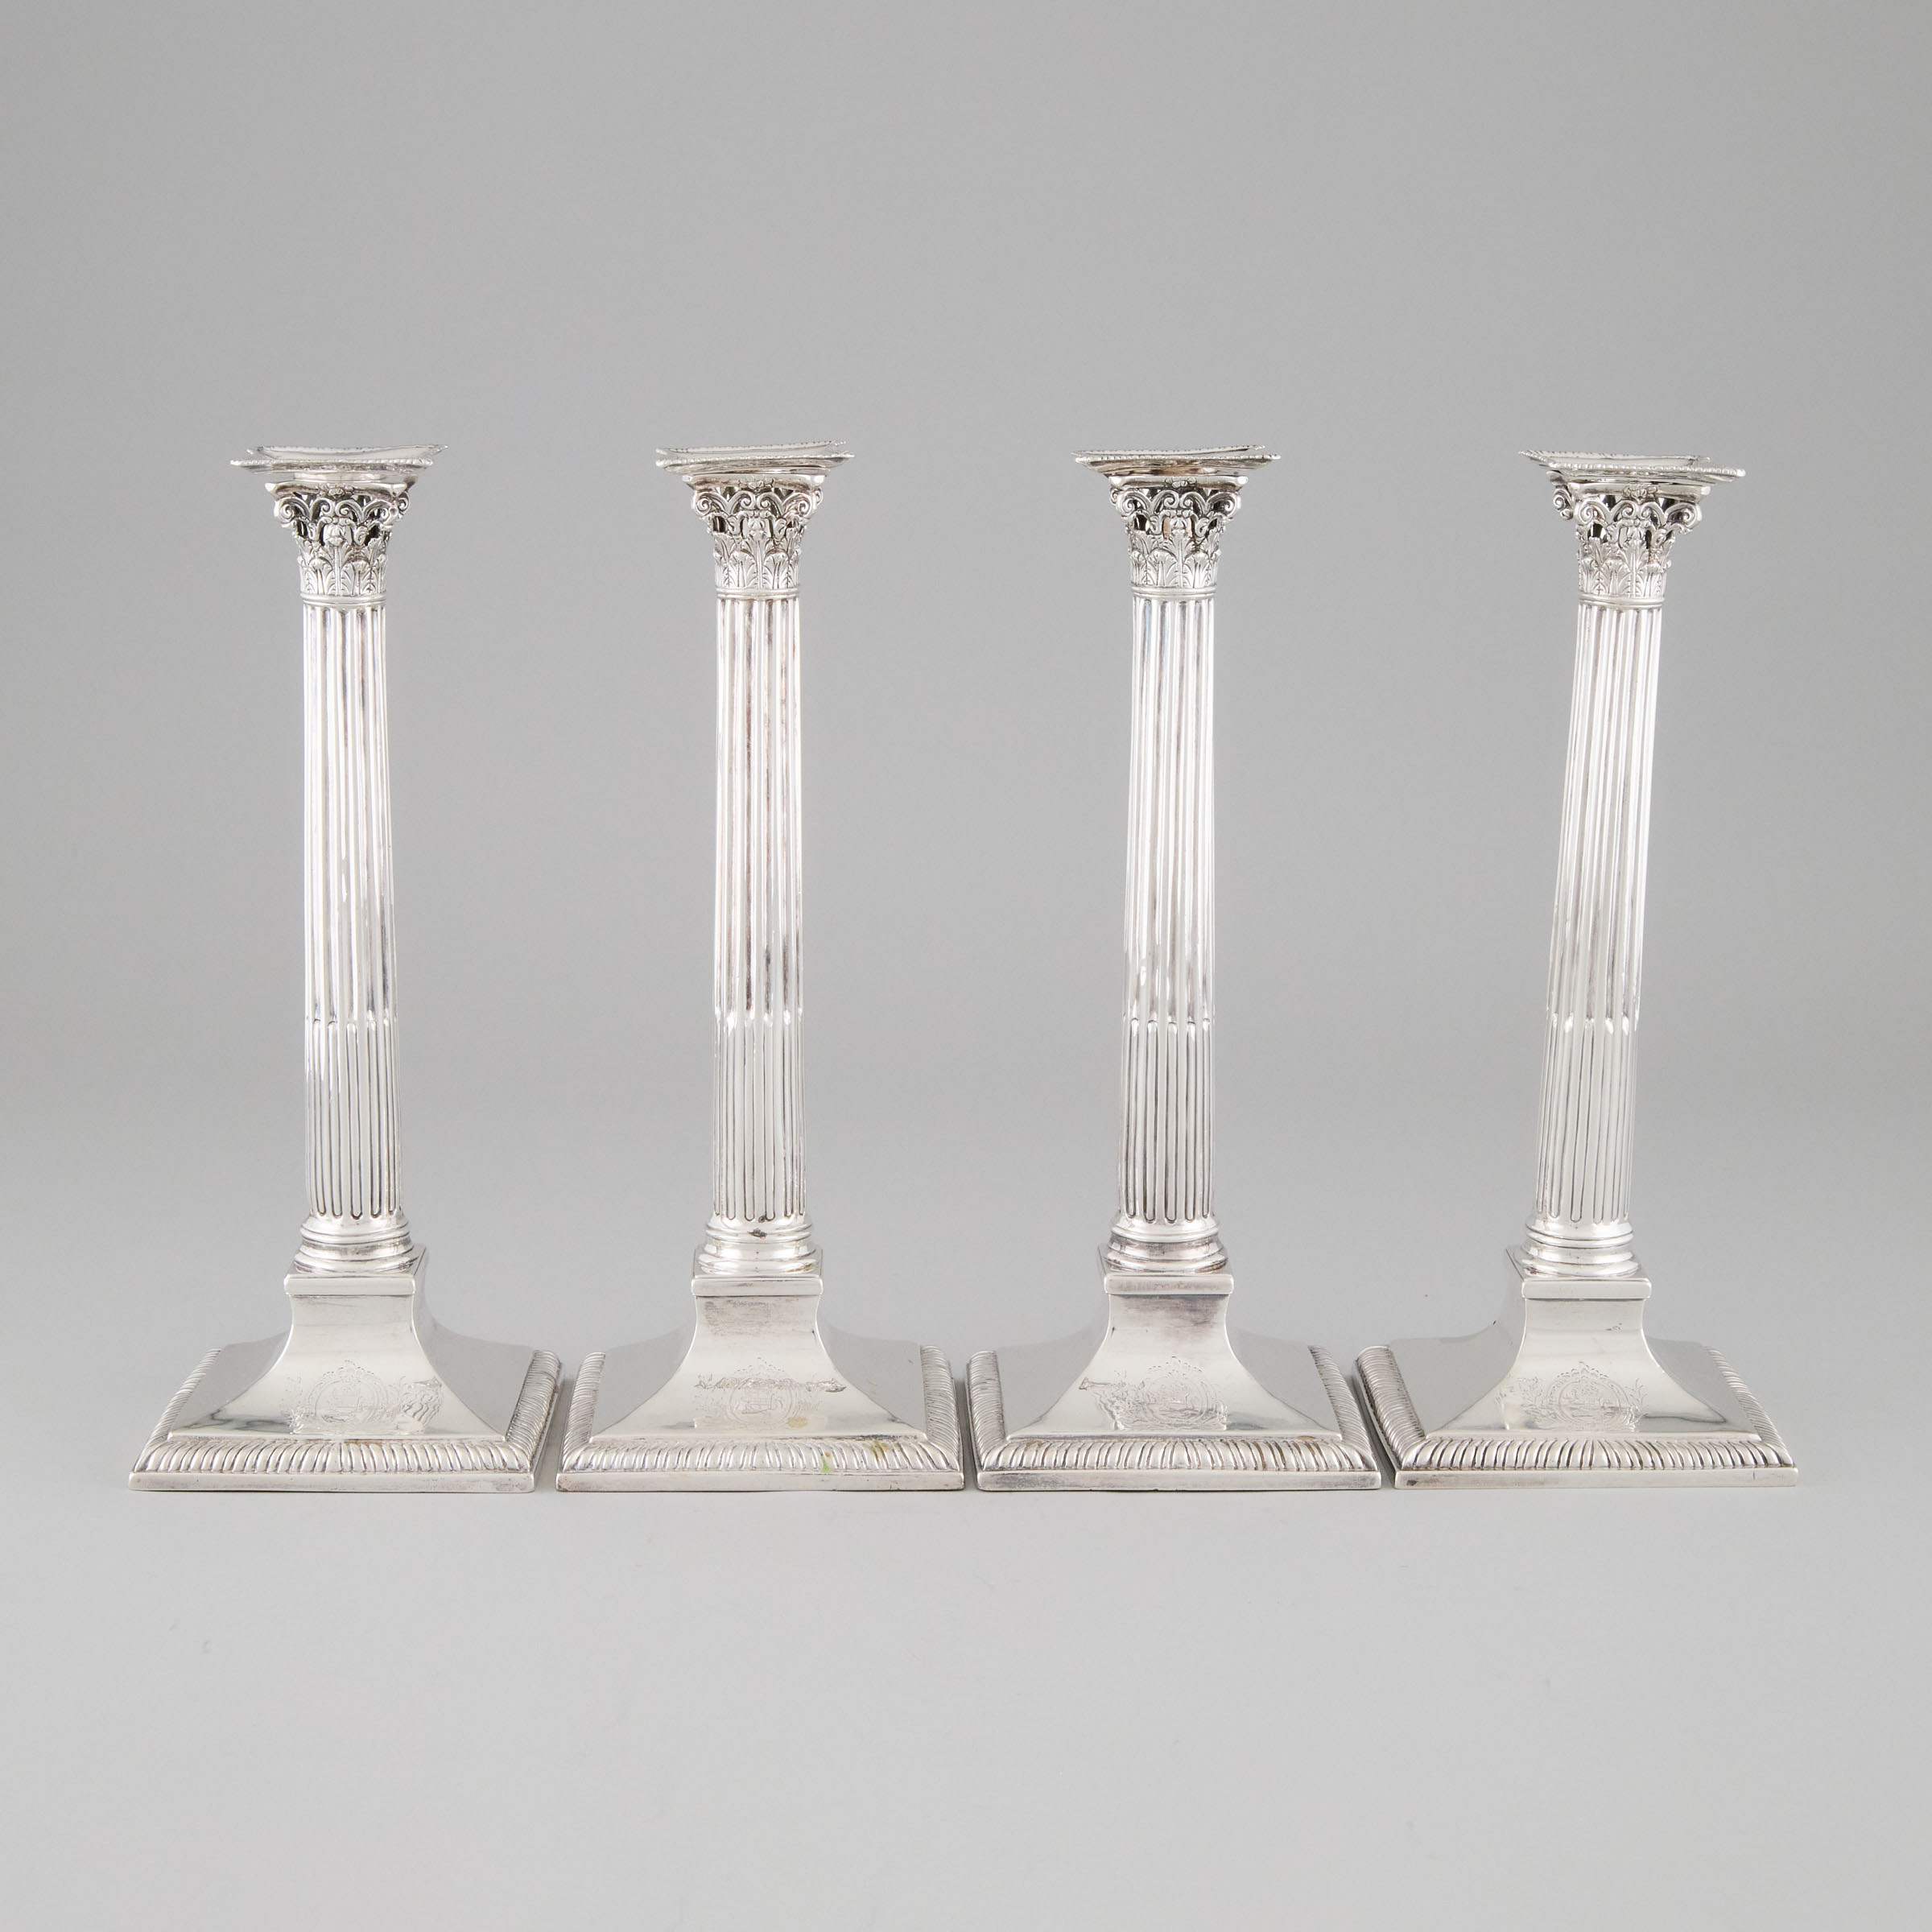 Set of Four George III Silver Table 3c969e